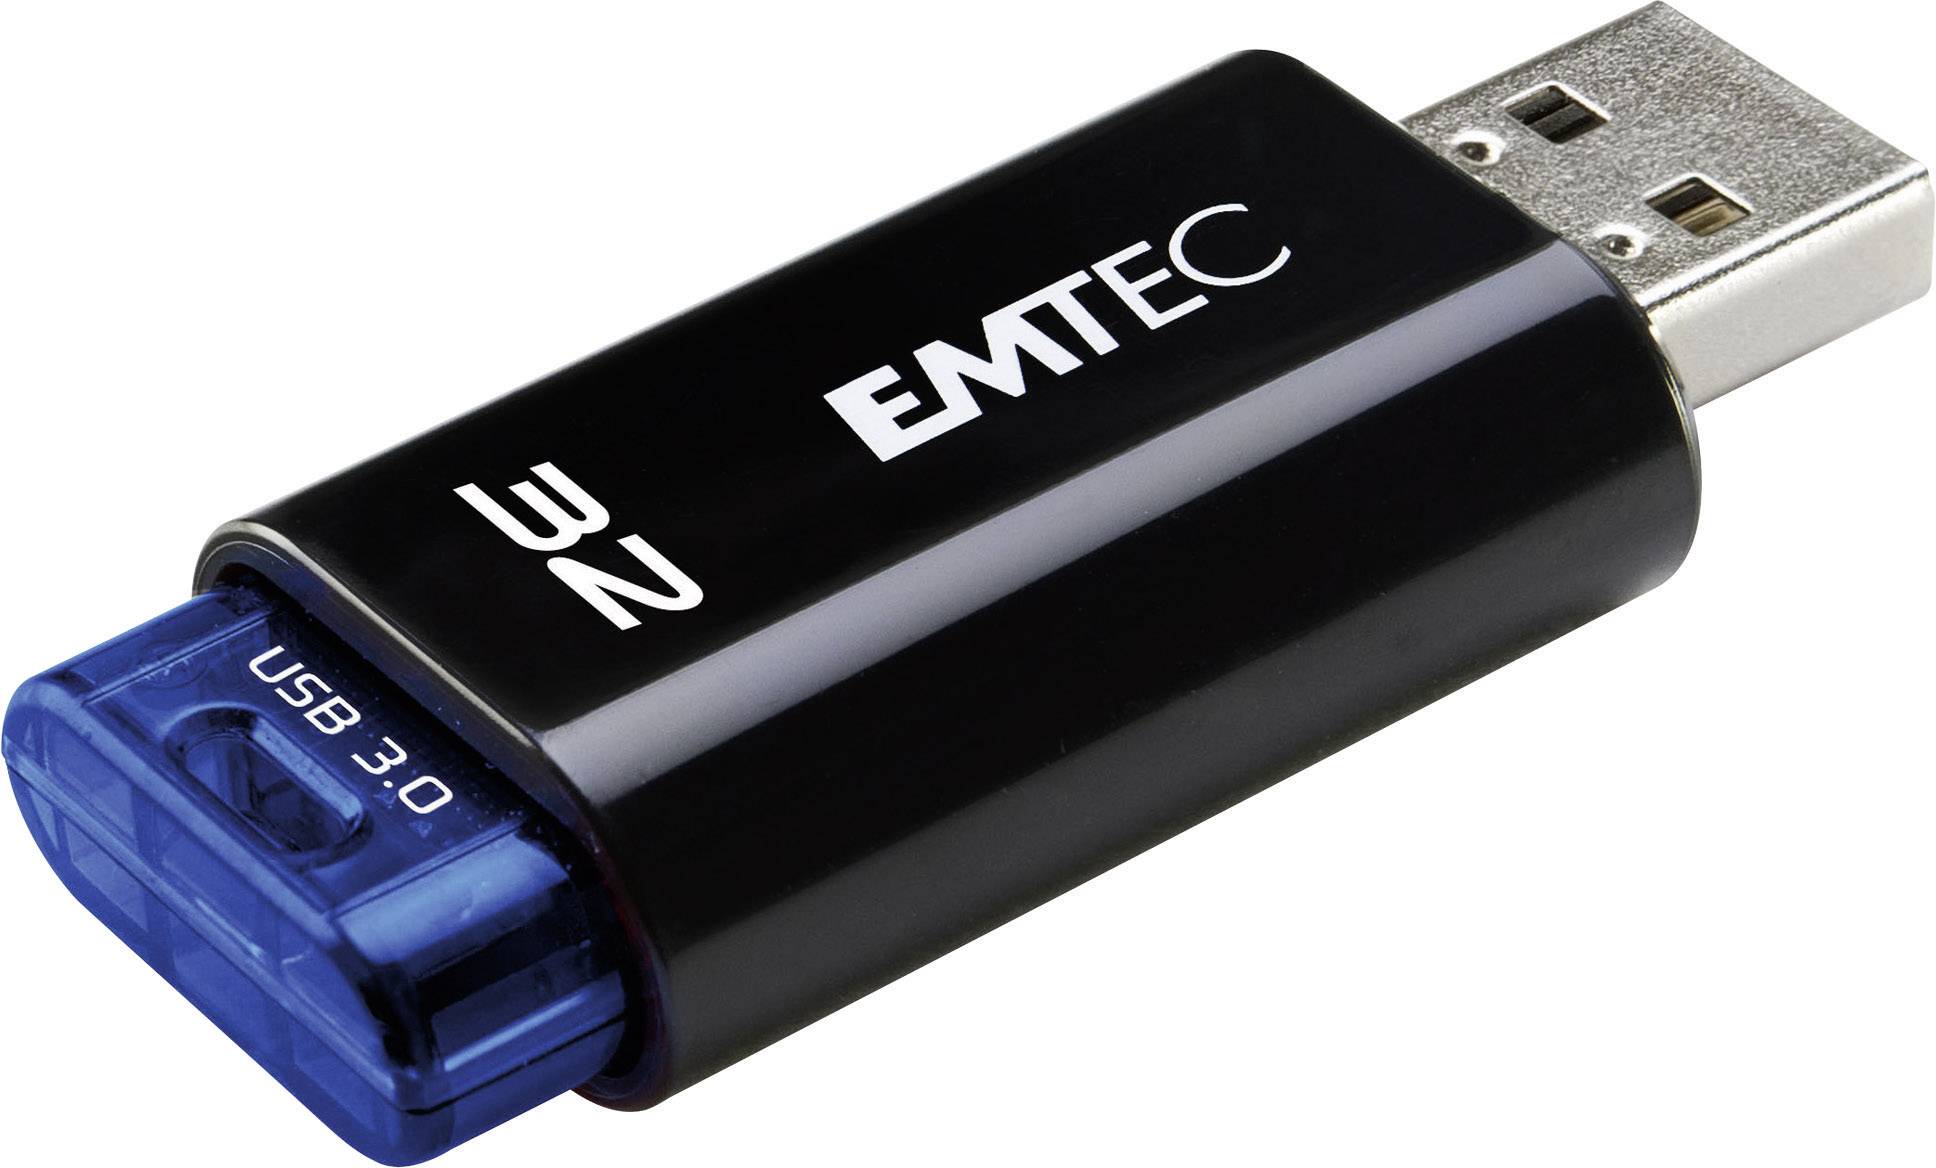 Usb 650. Флешка 32 ГБ. Флешка USB 3.0 перевертыш. Emtec c452. Флешка Emtec m200 32gb.